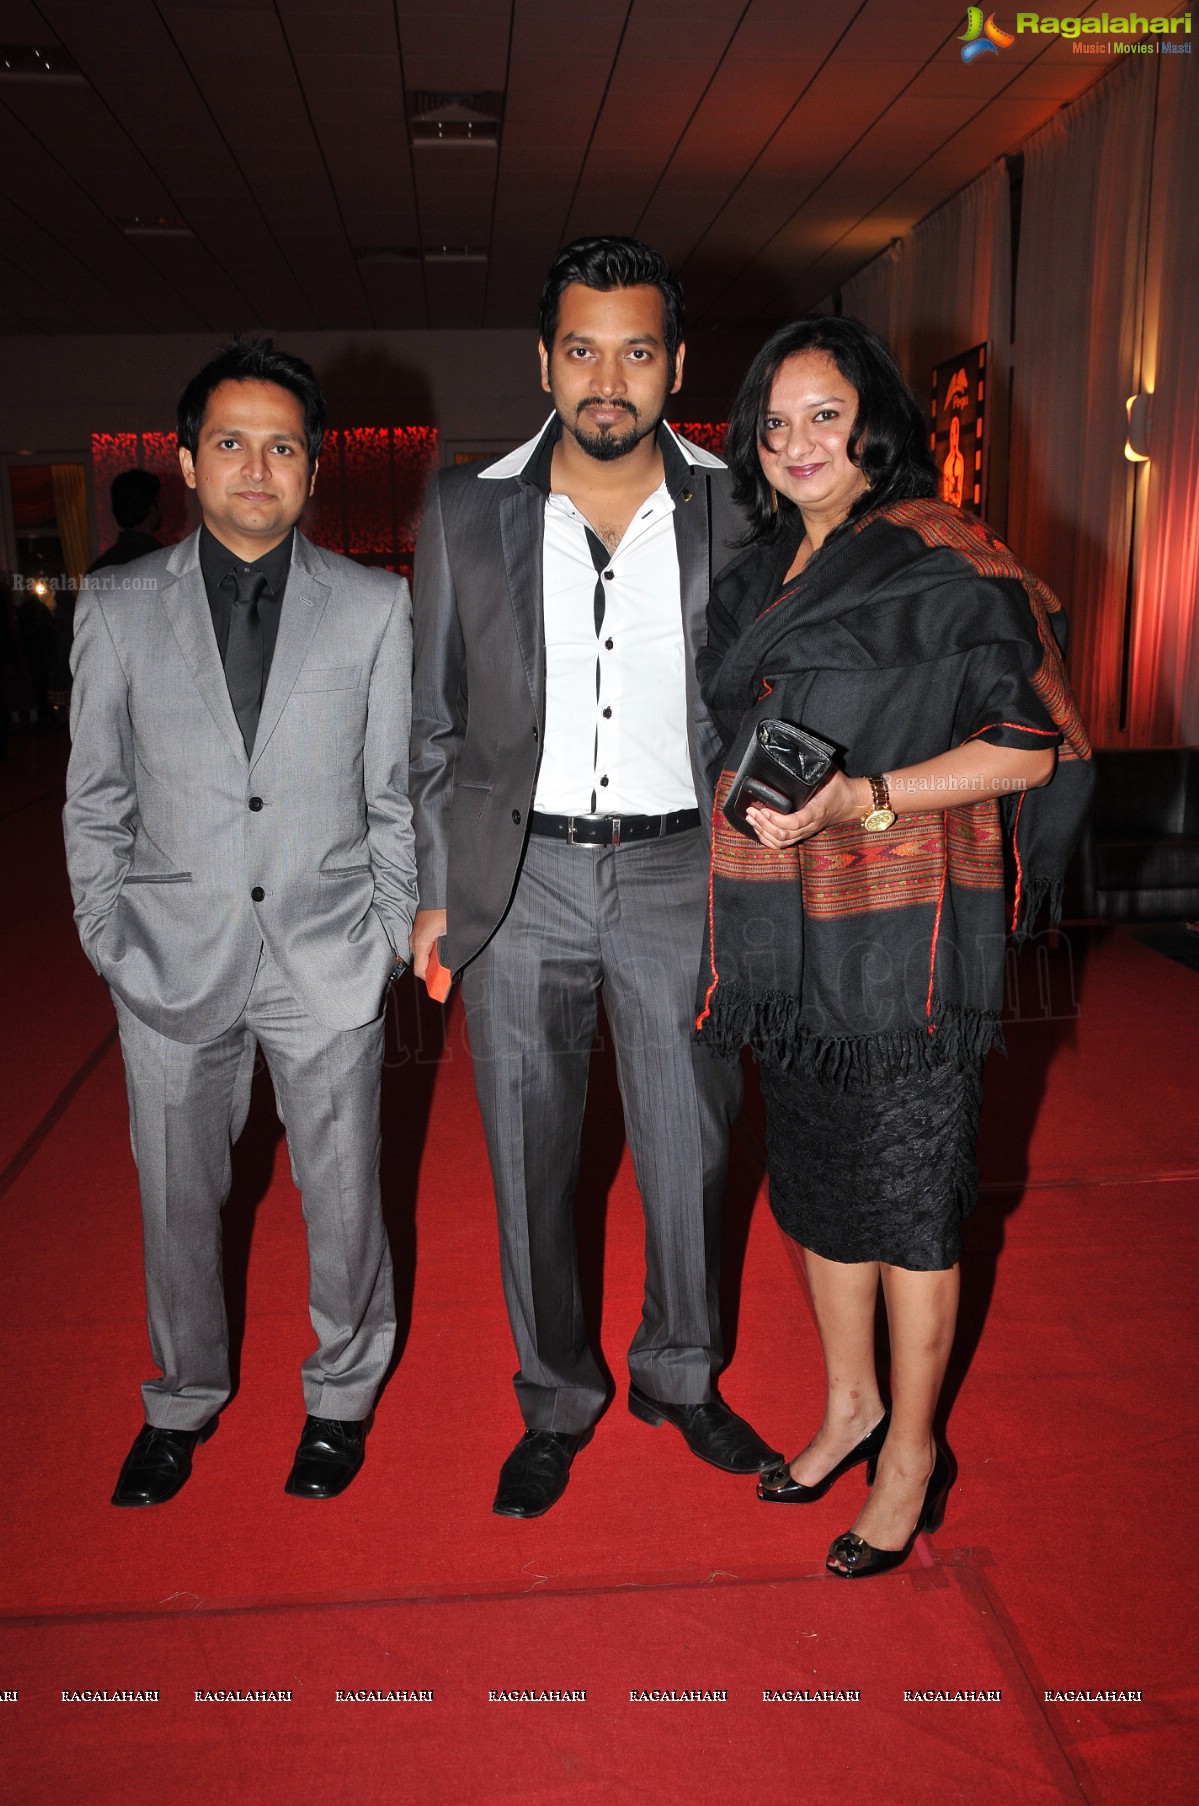 Oscar Meets Filmfare at Pegasystems' 5th Annual Day